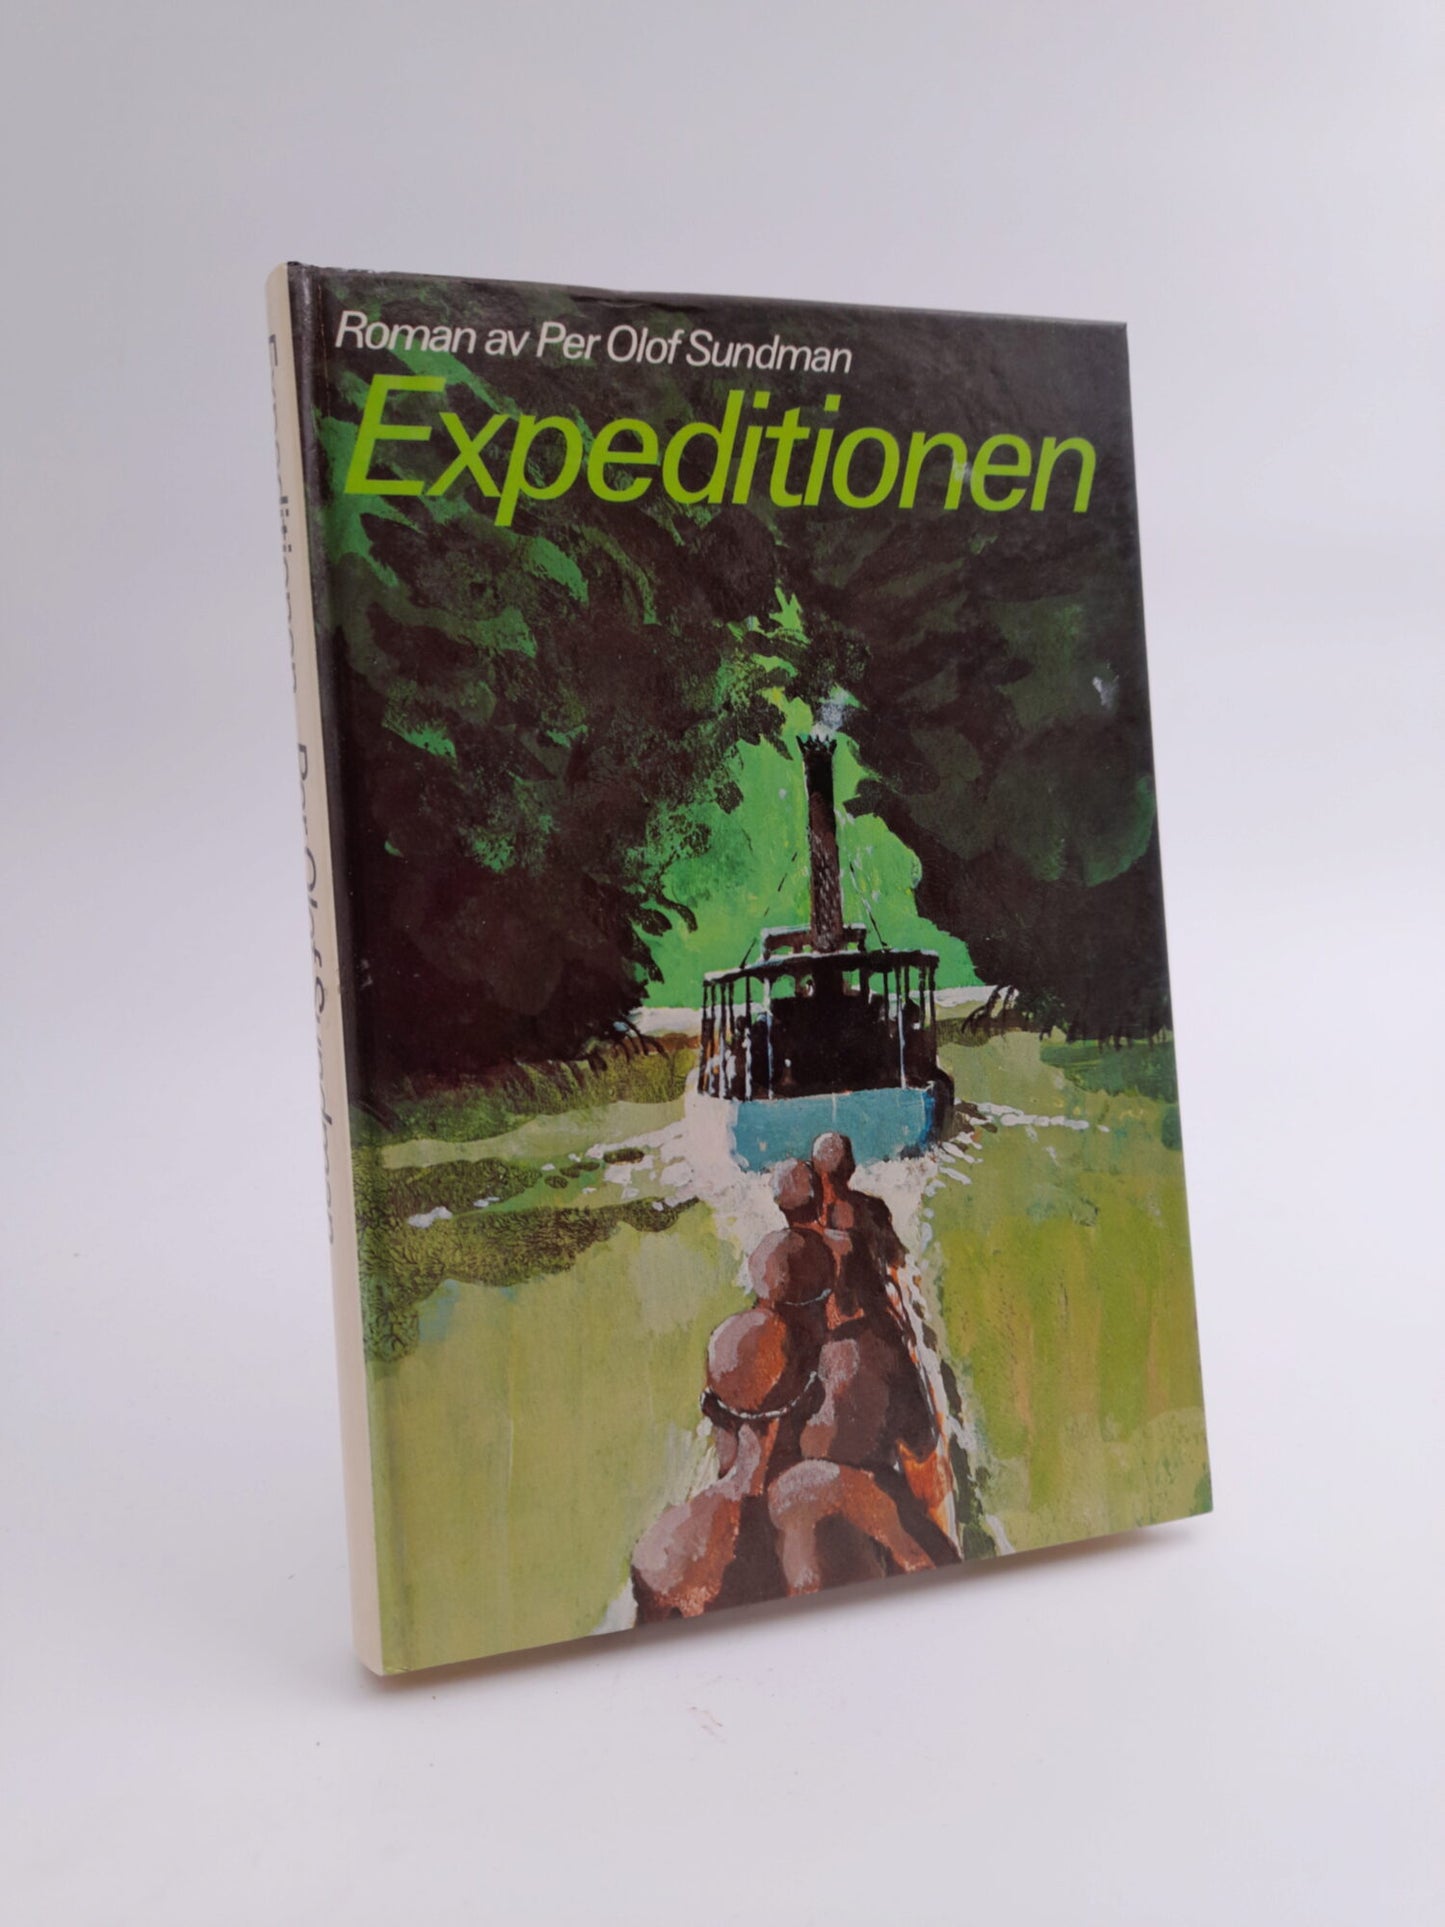 Sundman, Per Olof | Expeditionen